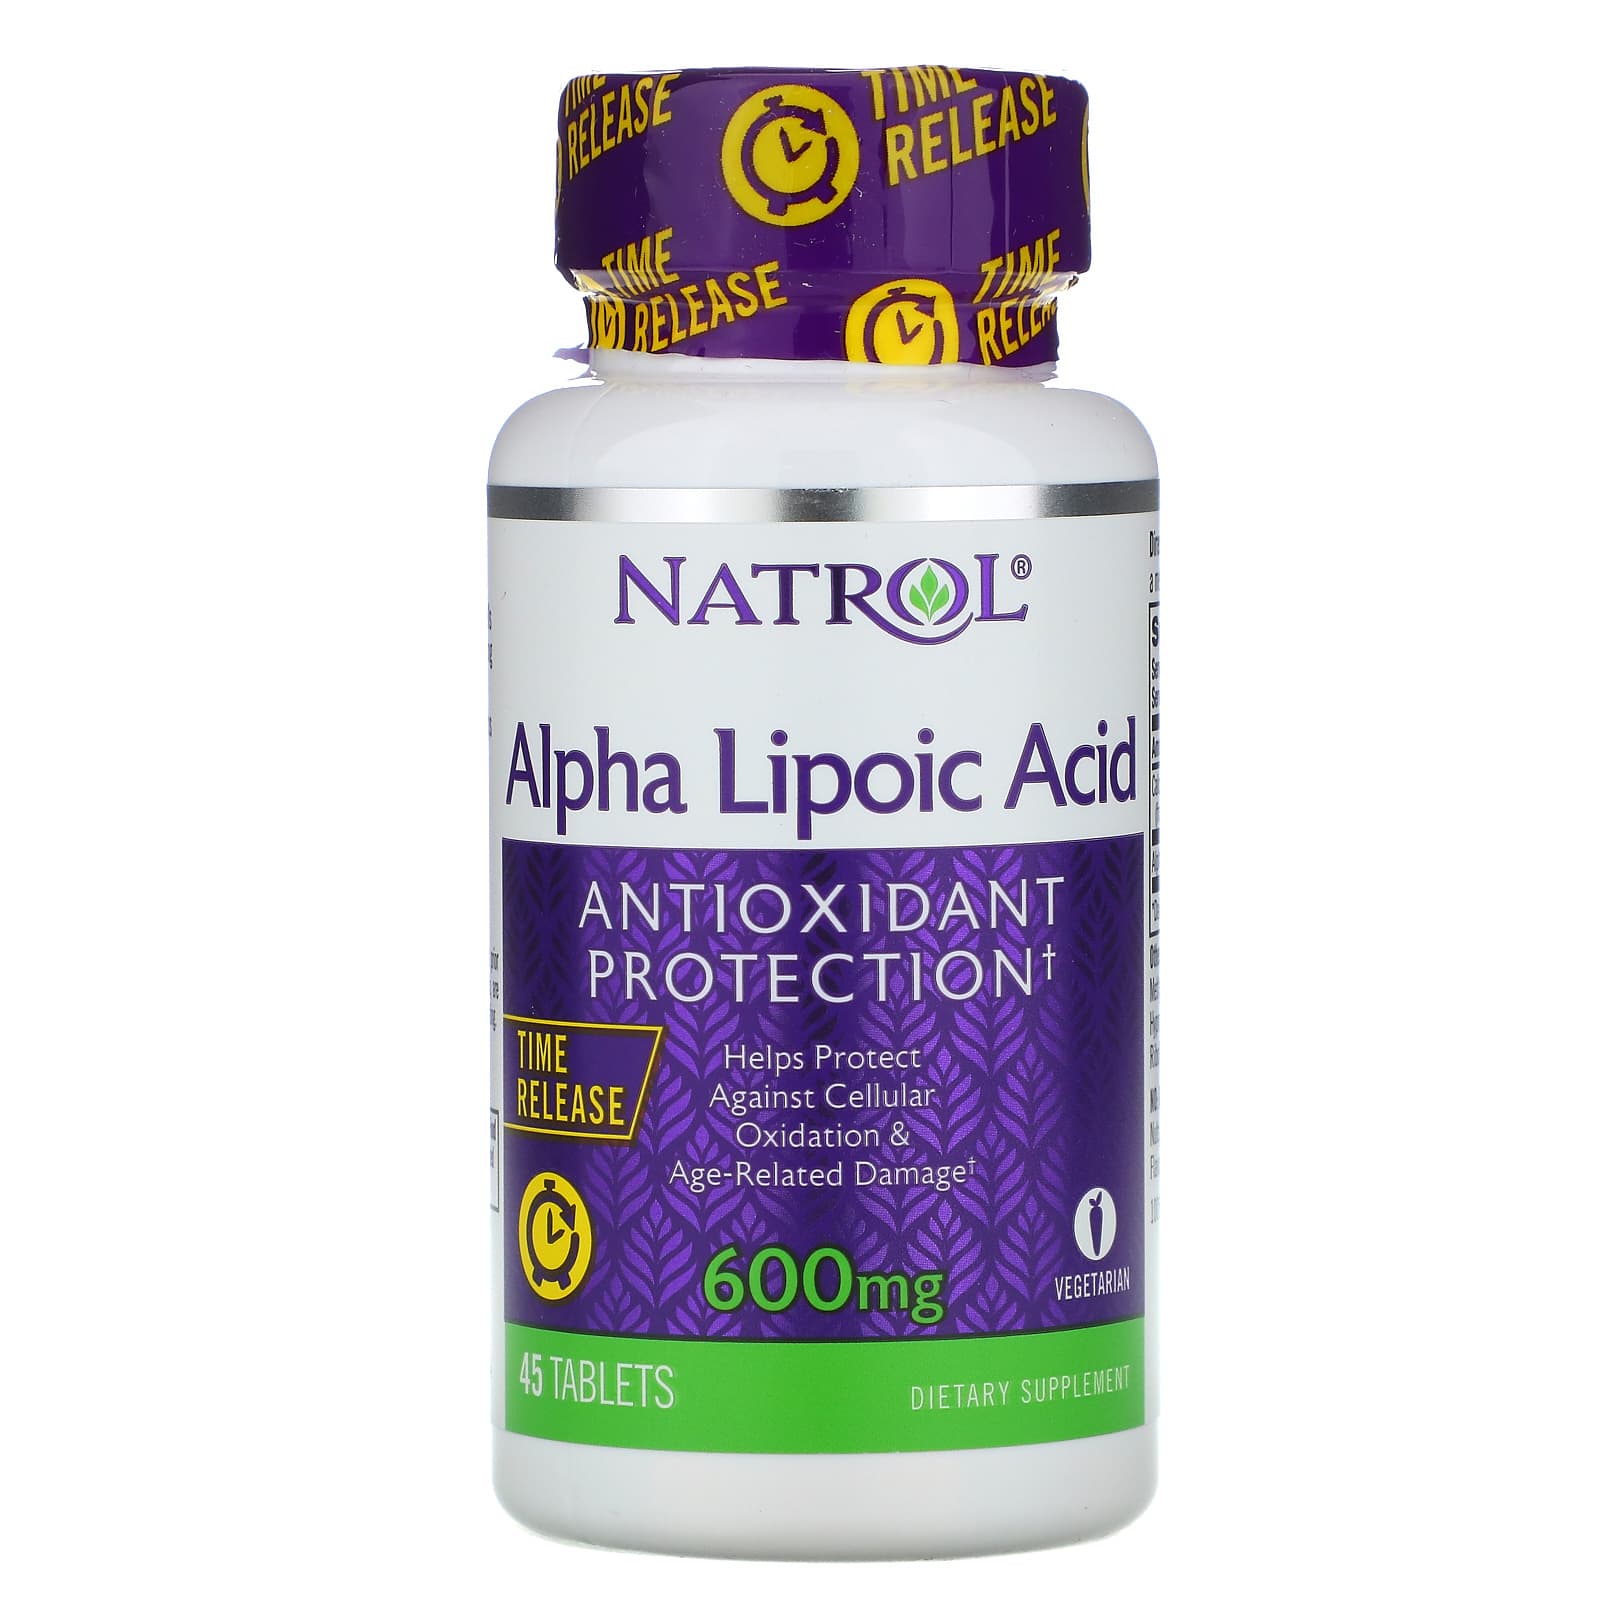 Natrol Alpha Lipoic Acid 600 mg Time Release antioxidant - 45 Tablets